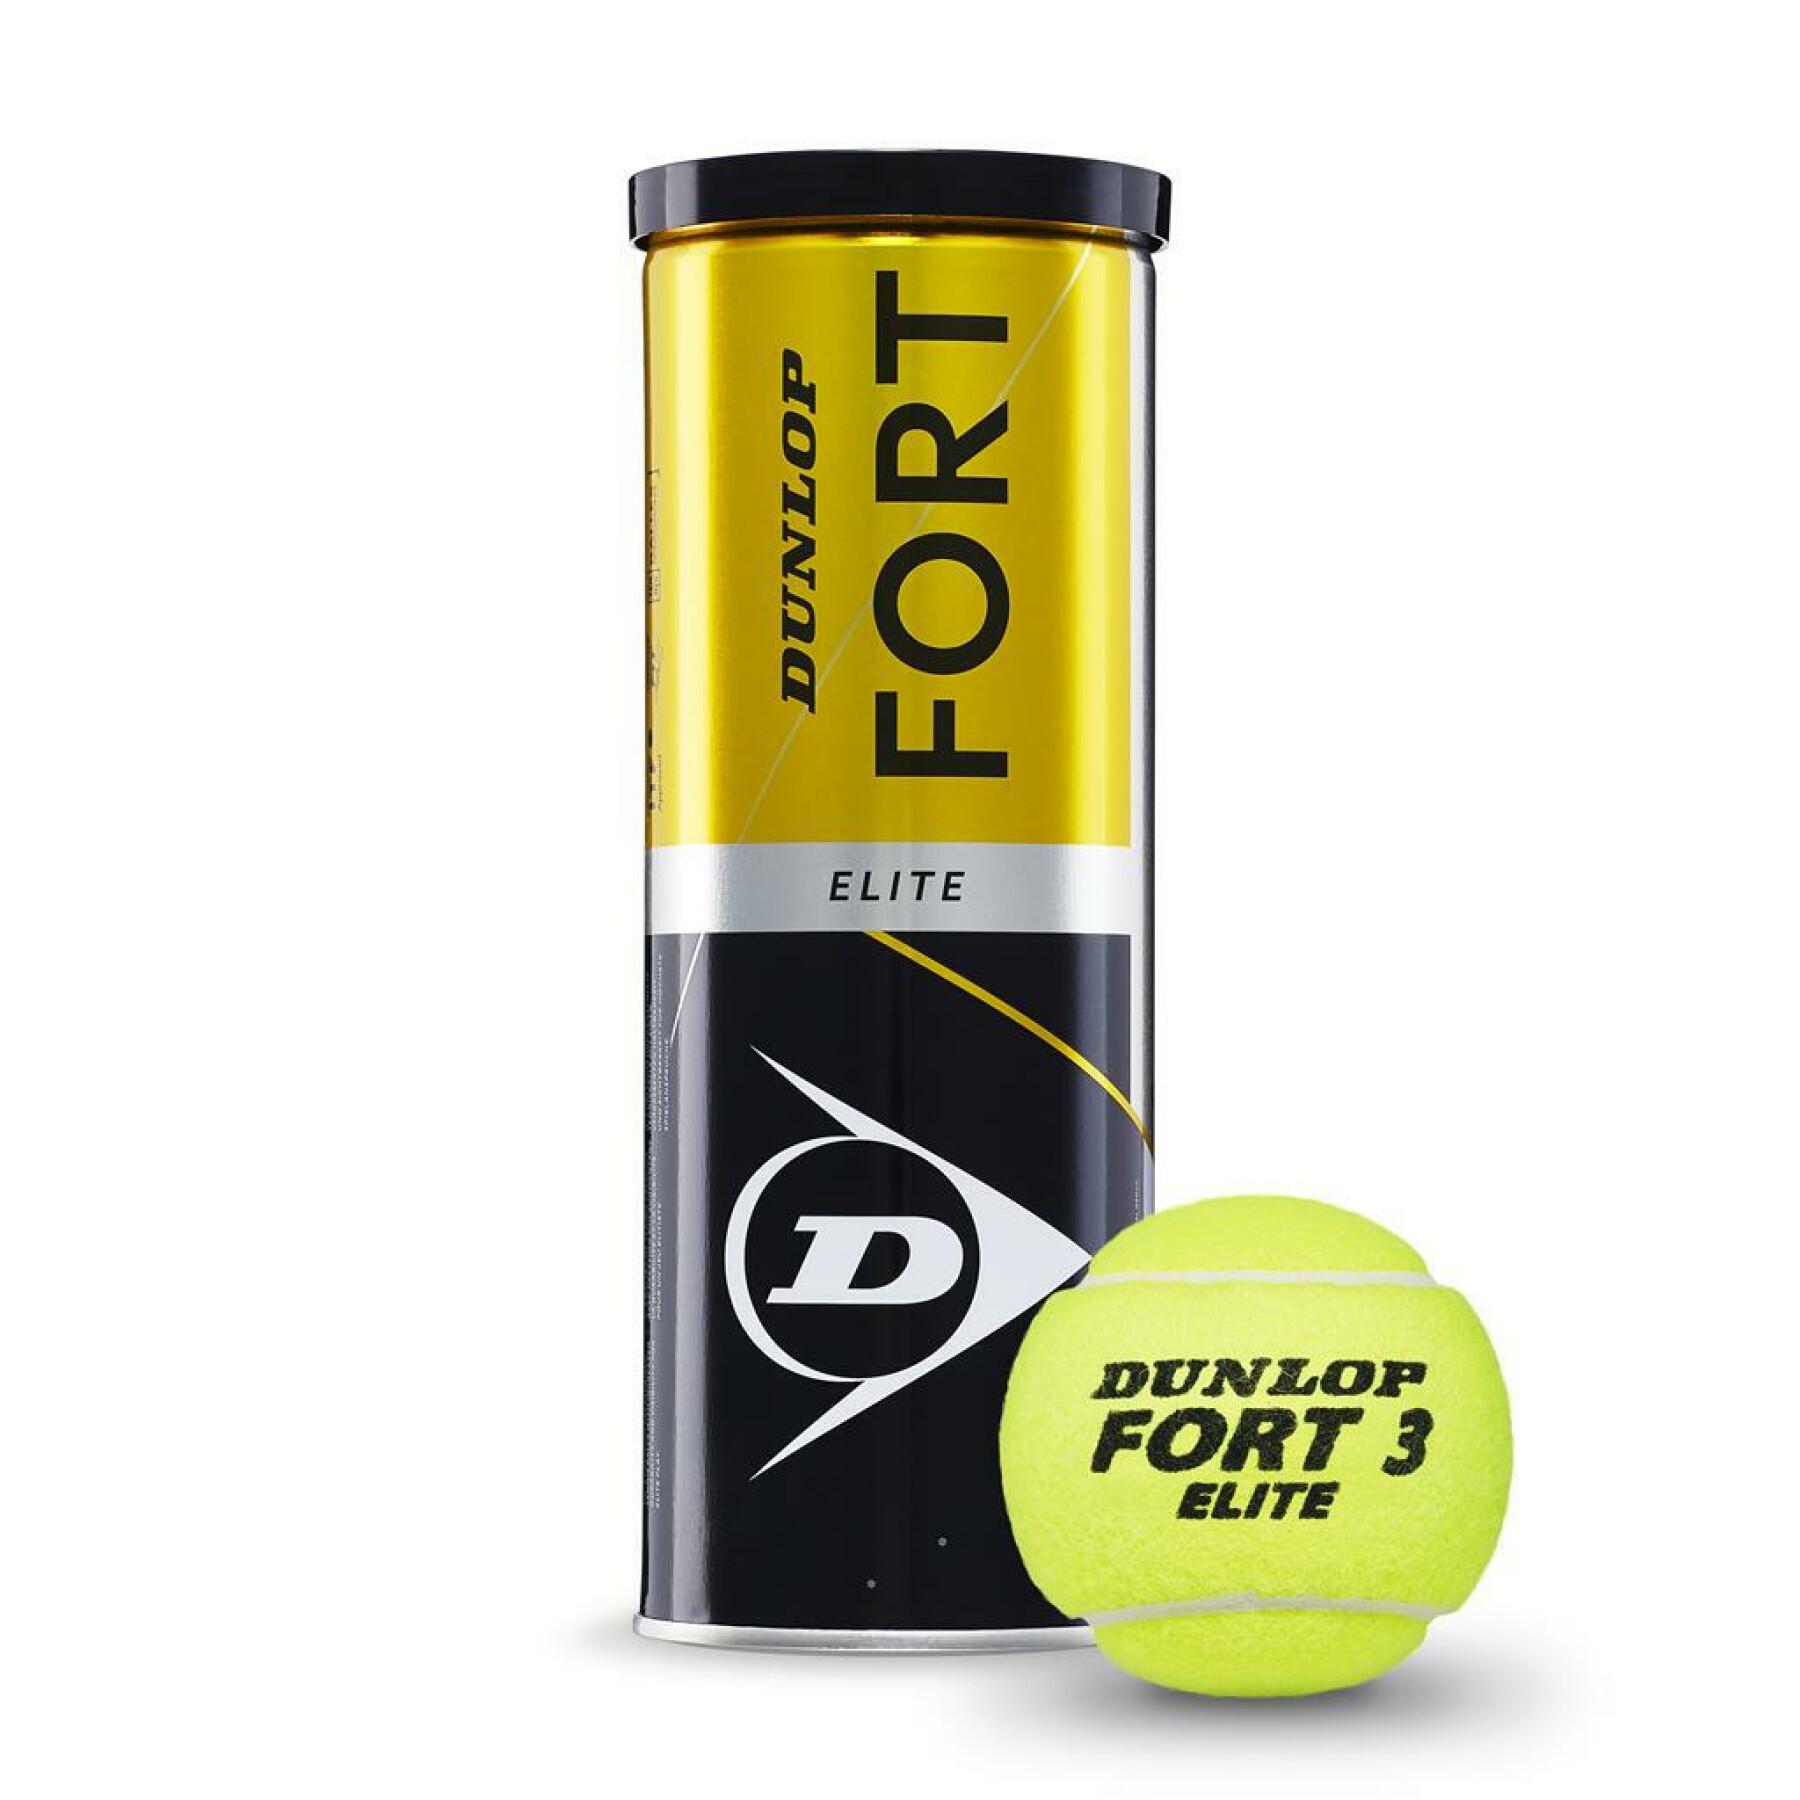 Set of 3 tennis balls Dunlop fort elite